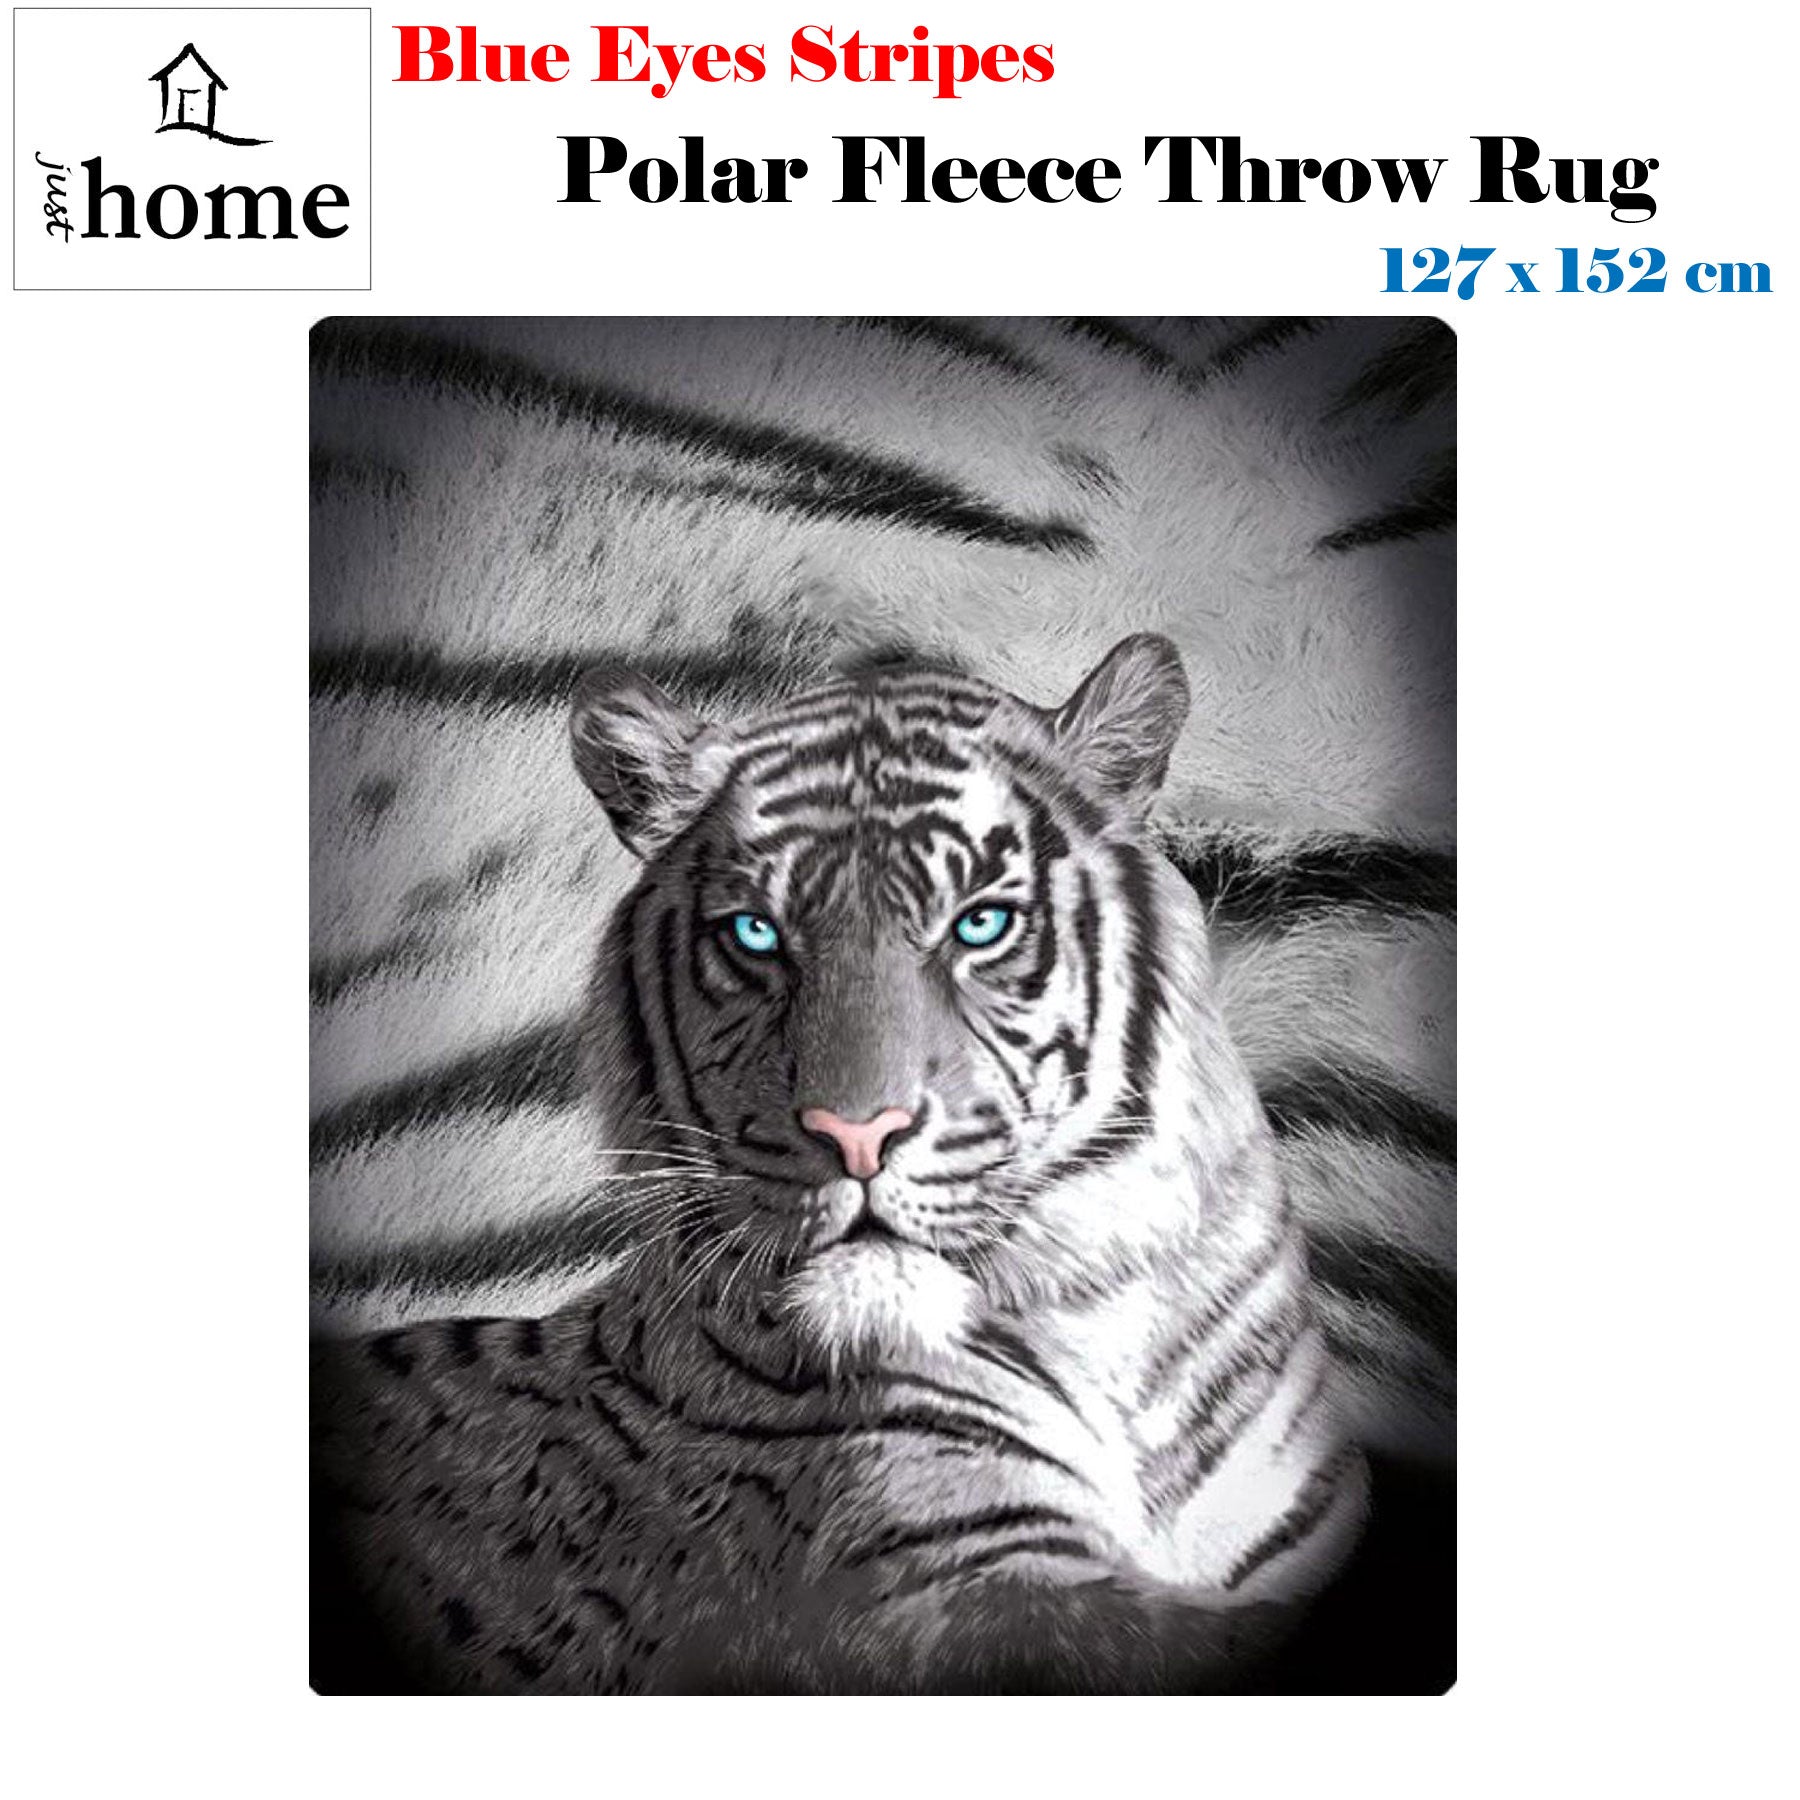 Just Home Blue Eyes Stripes Tiger Polar Fleece Throw Rug - Newstart Furniture